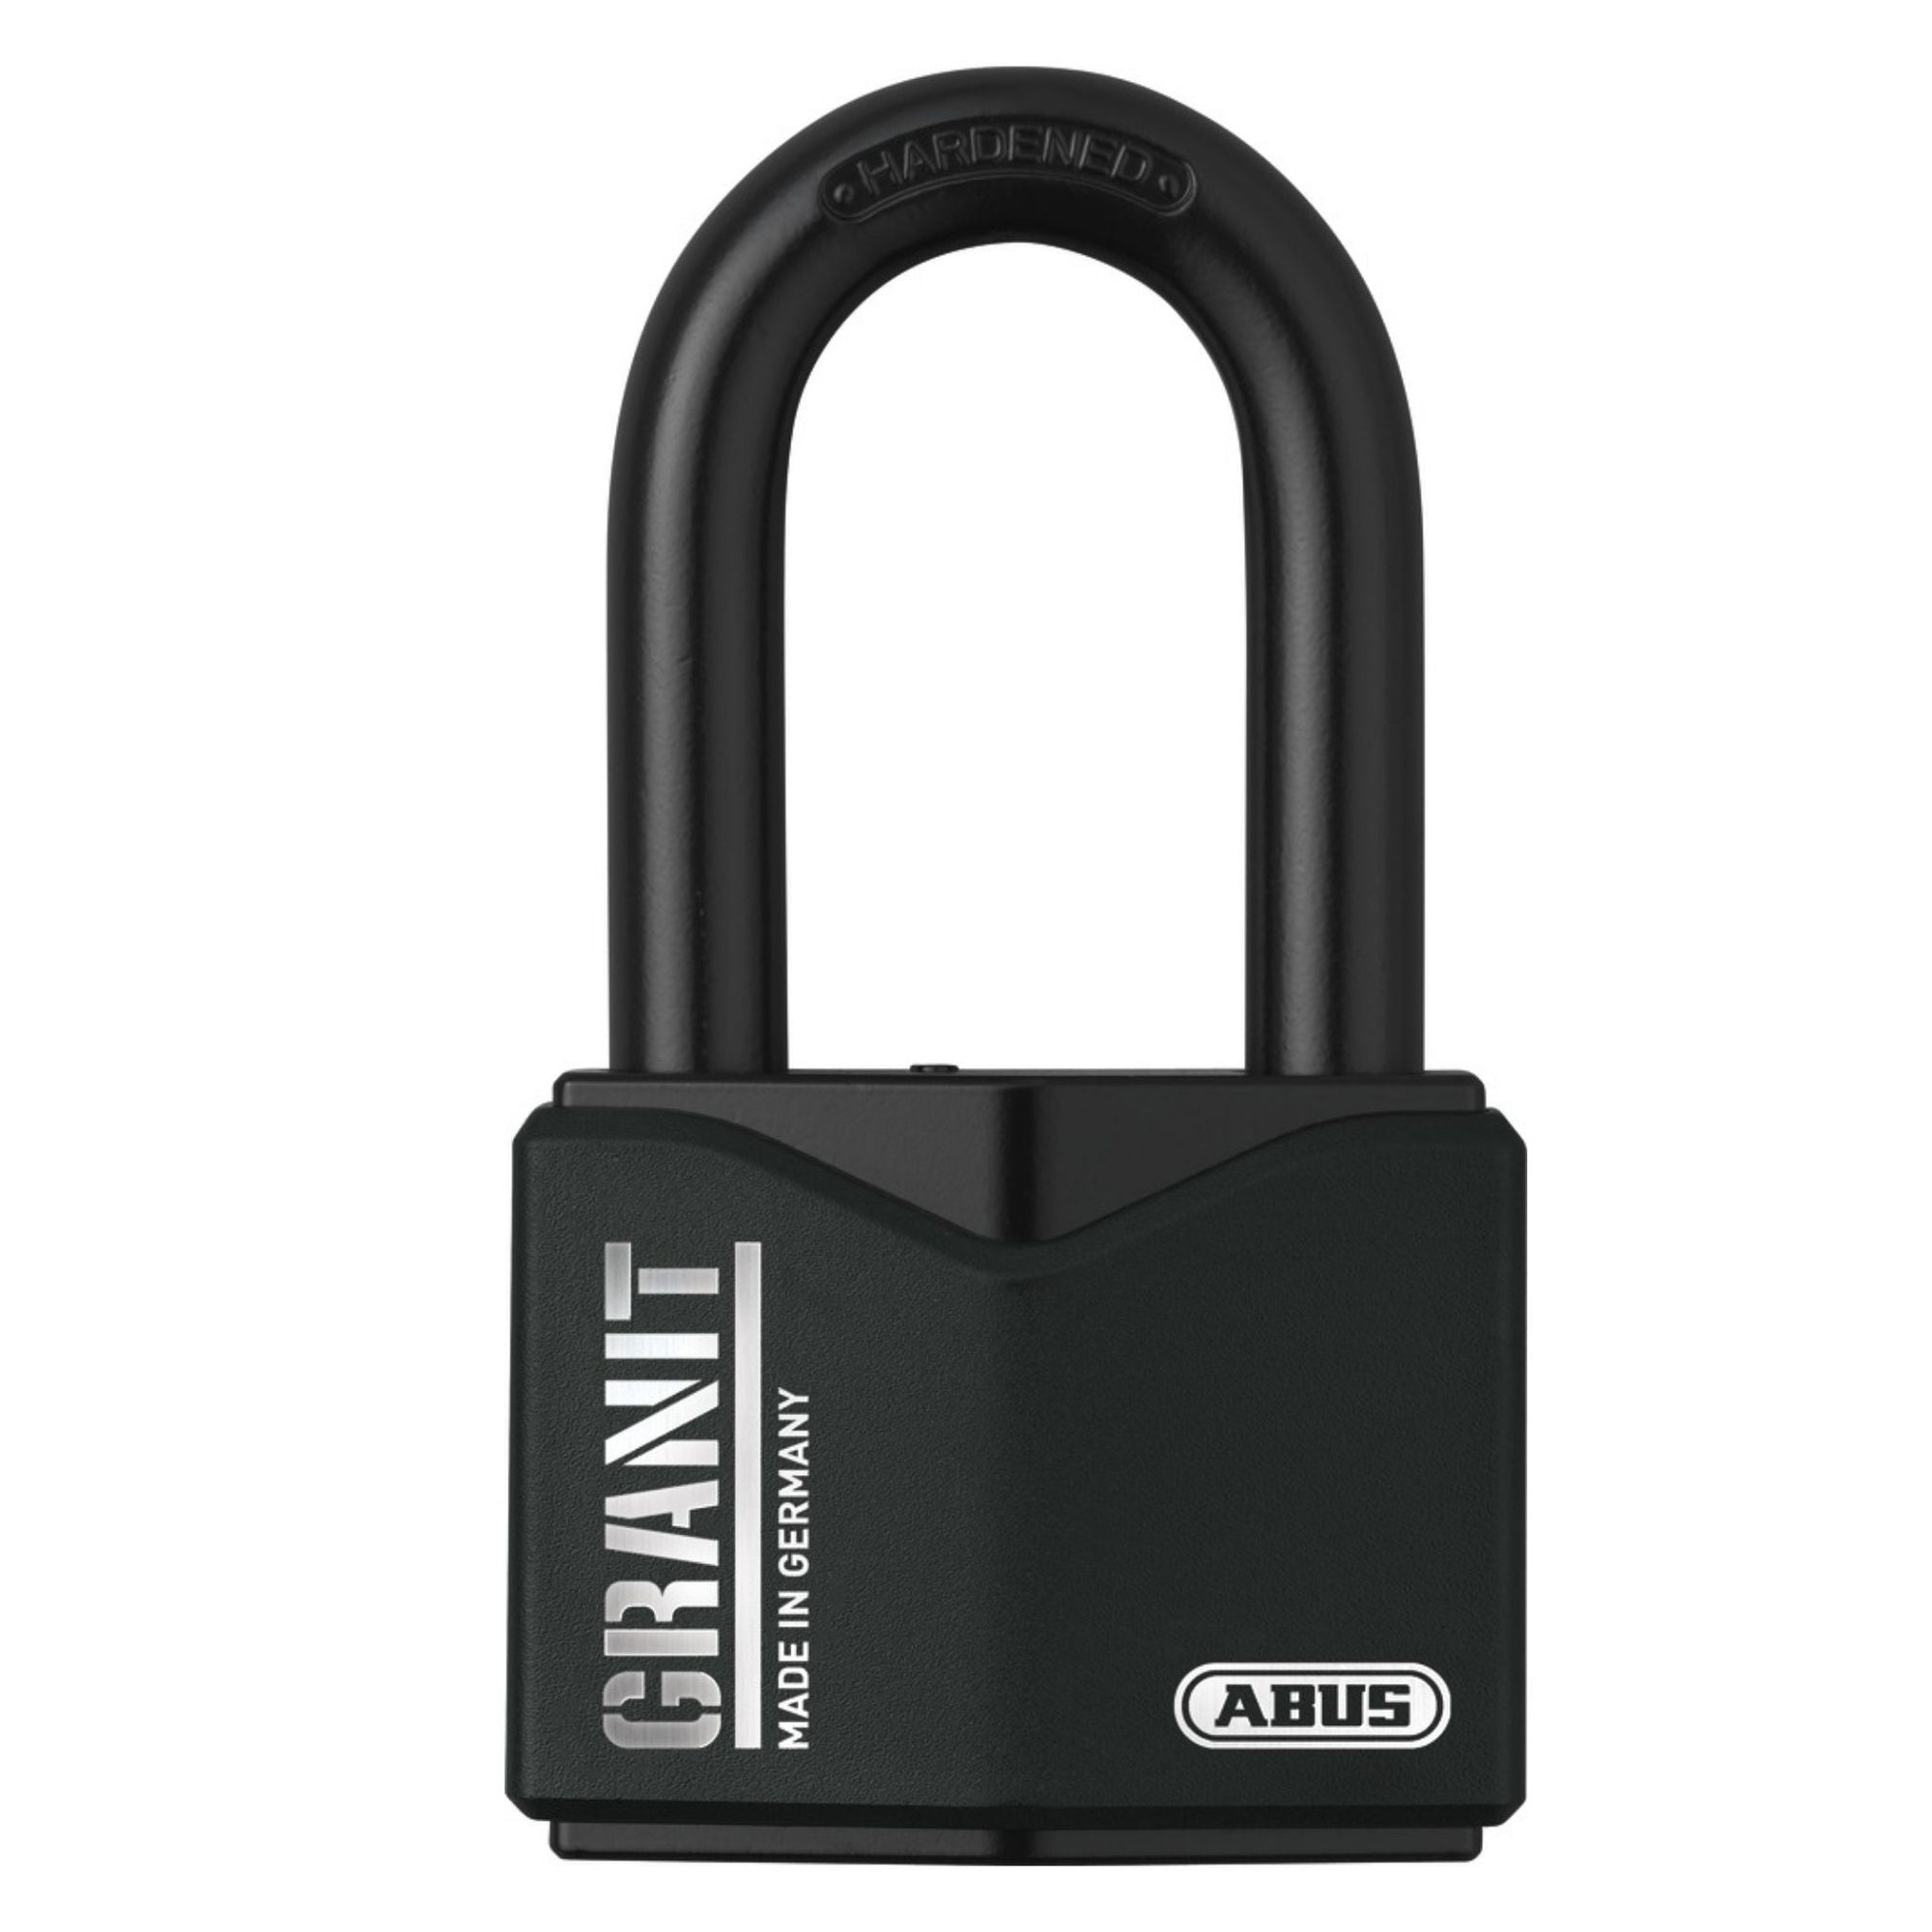 Abus 37/55HB50 KA 5544653 Granit Padlock Keyed Alike Locks with 2" Shackle Match to Existing Key# KA5544653 - The Lock Source